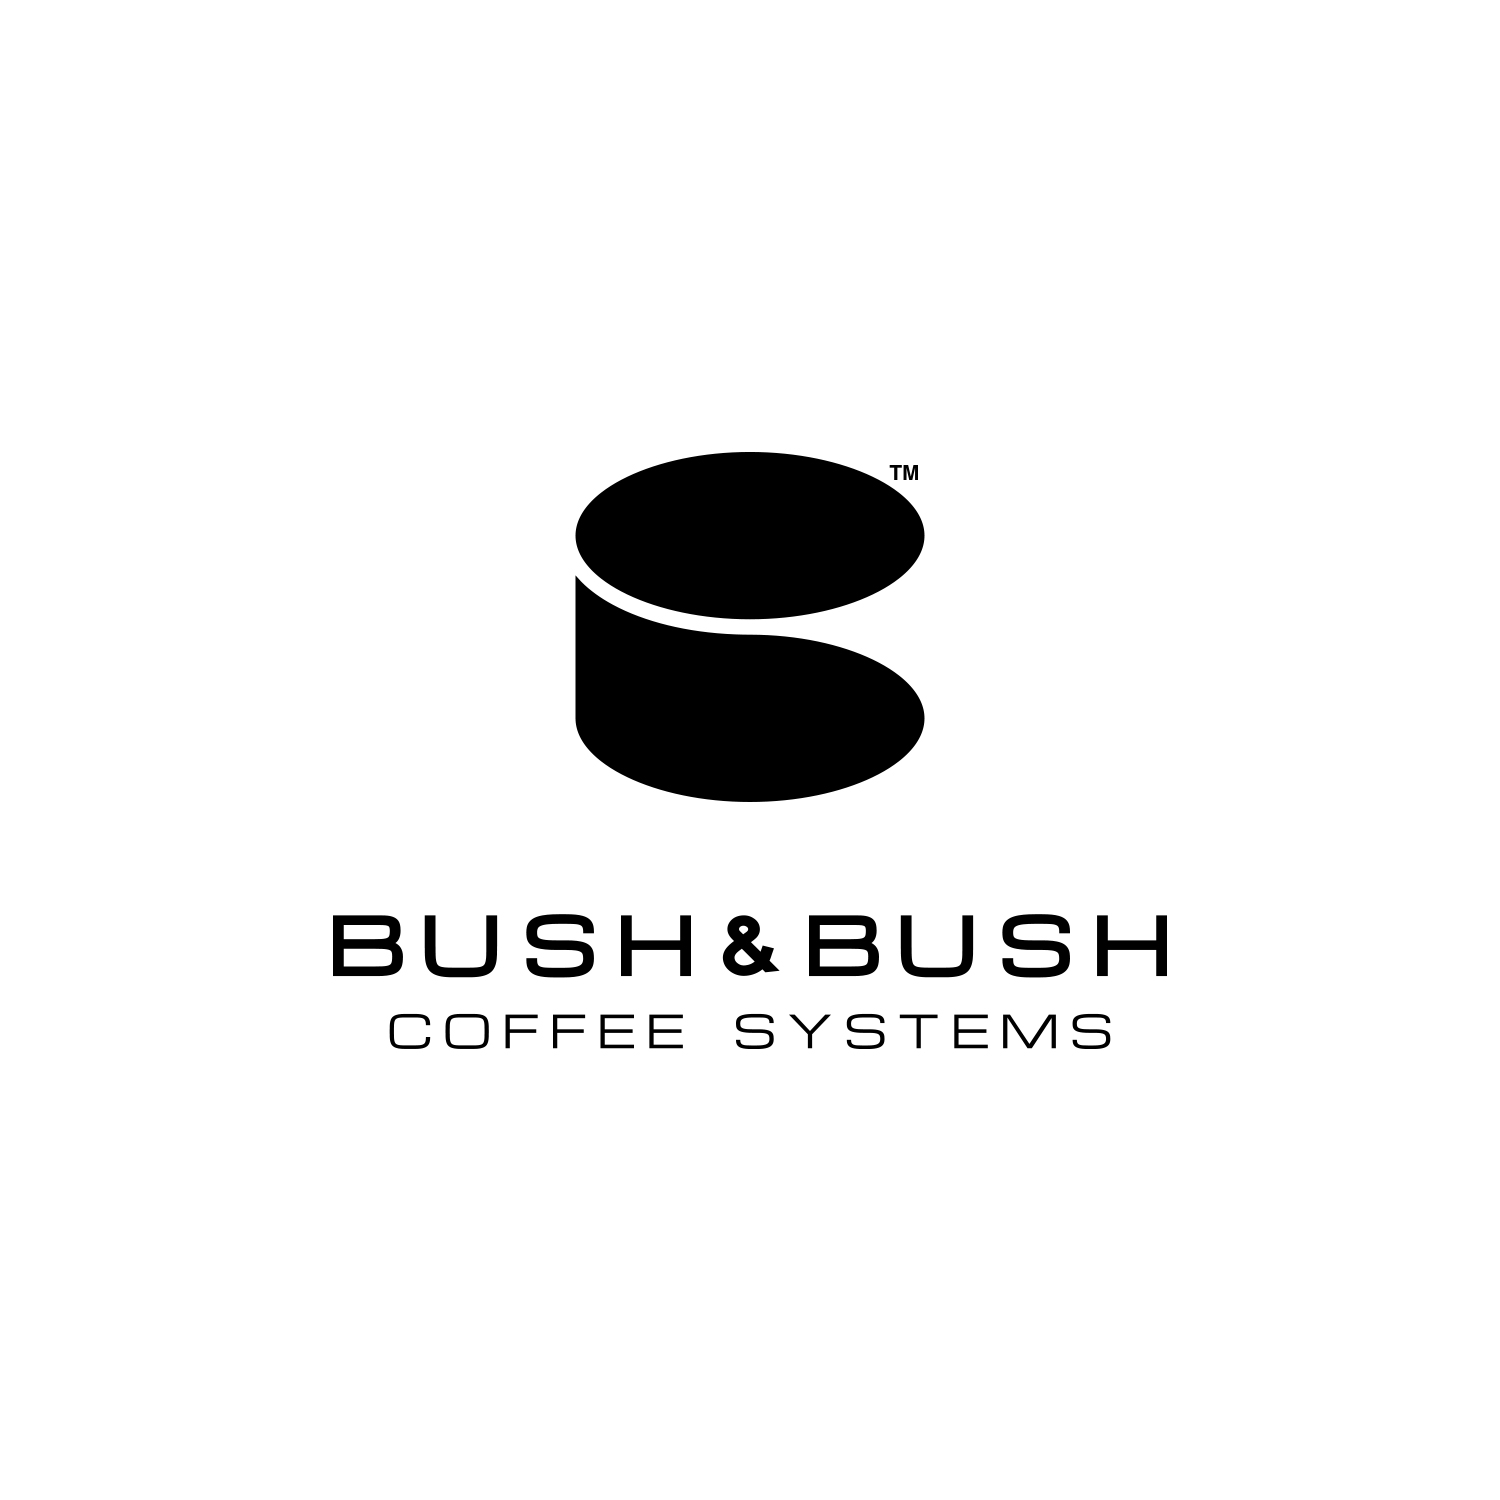 Bush & Bush